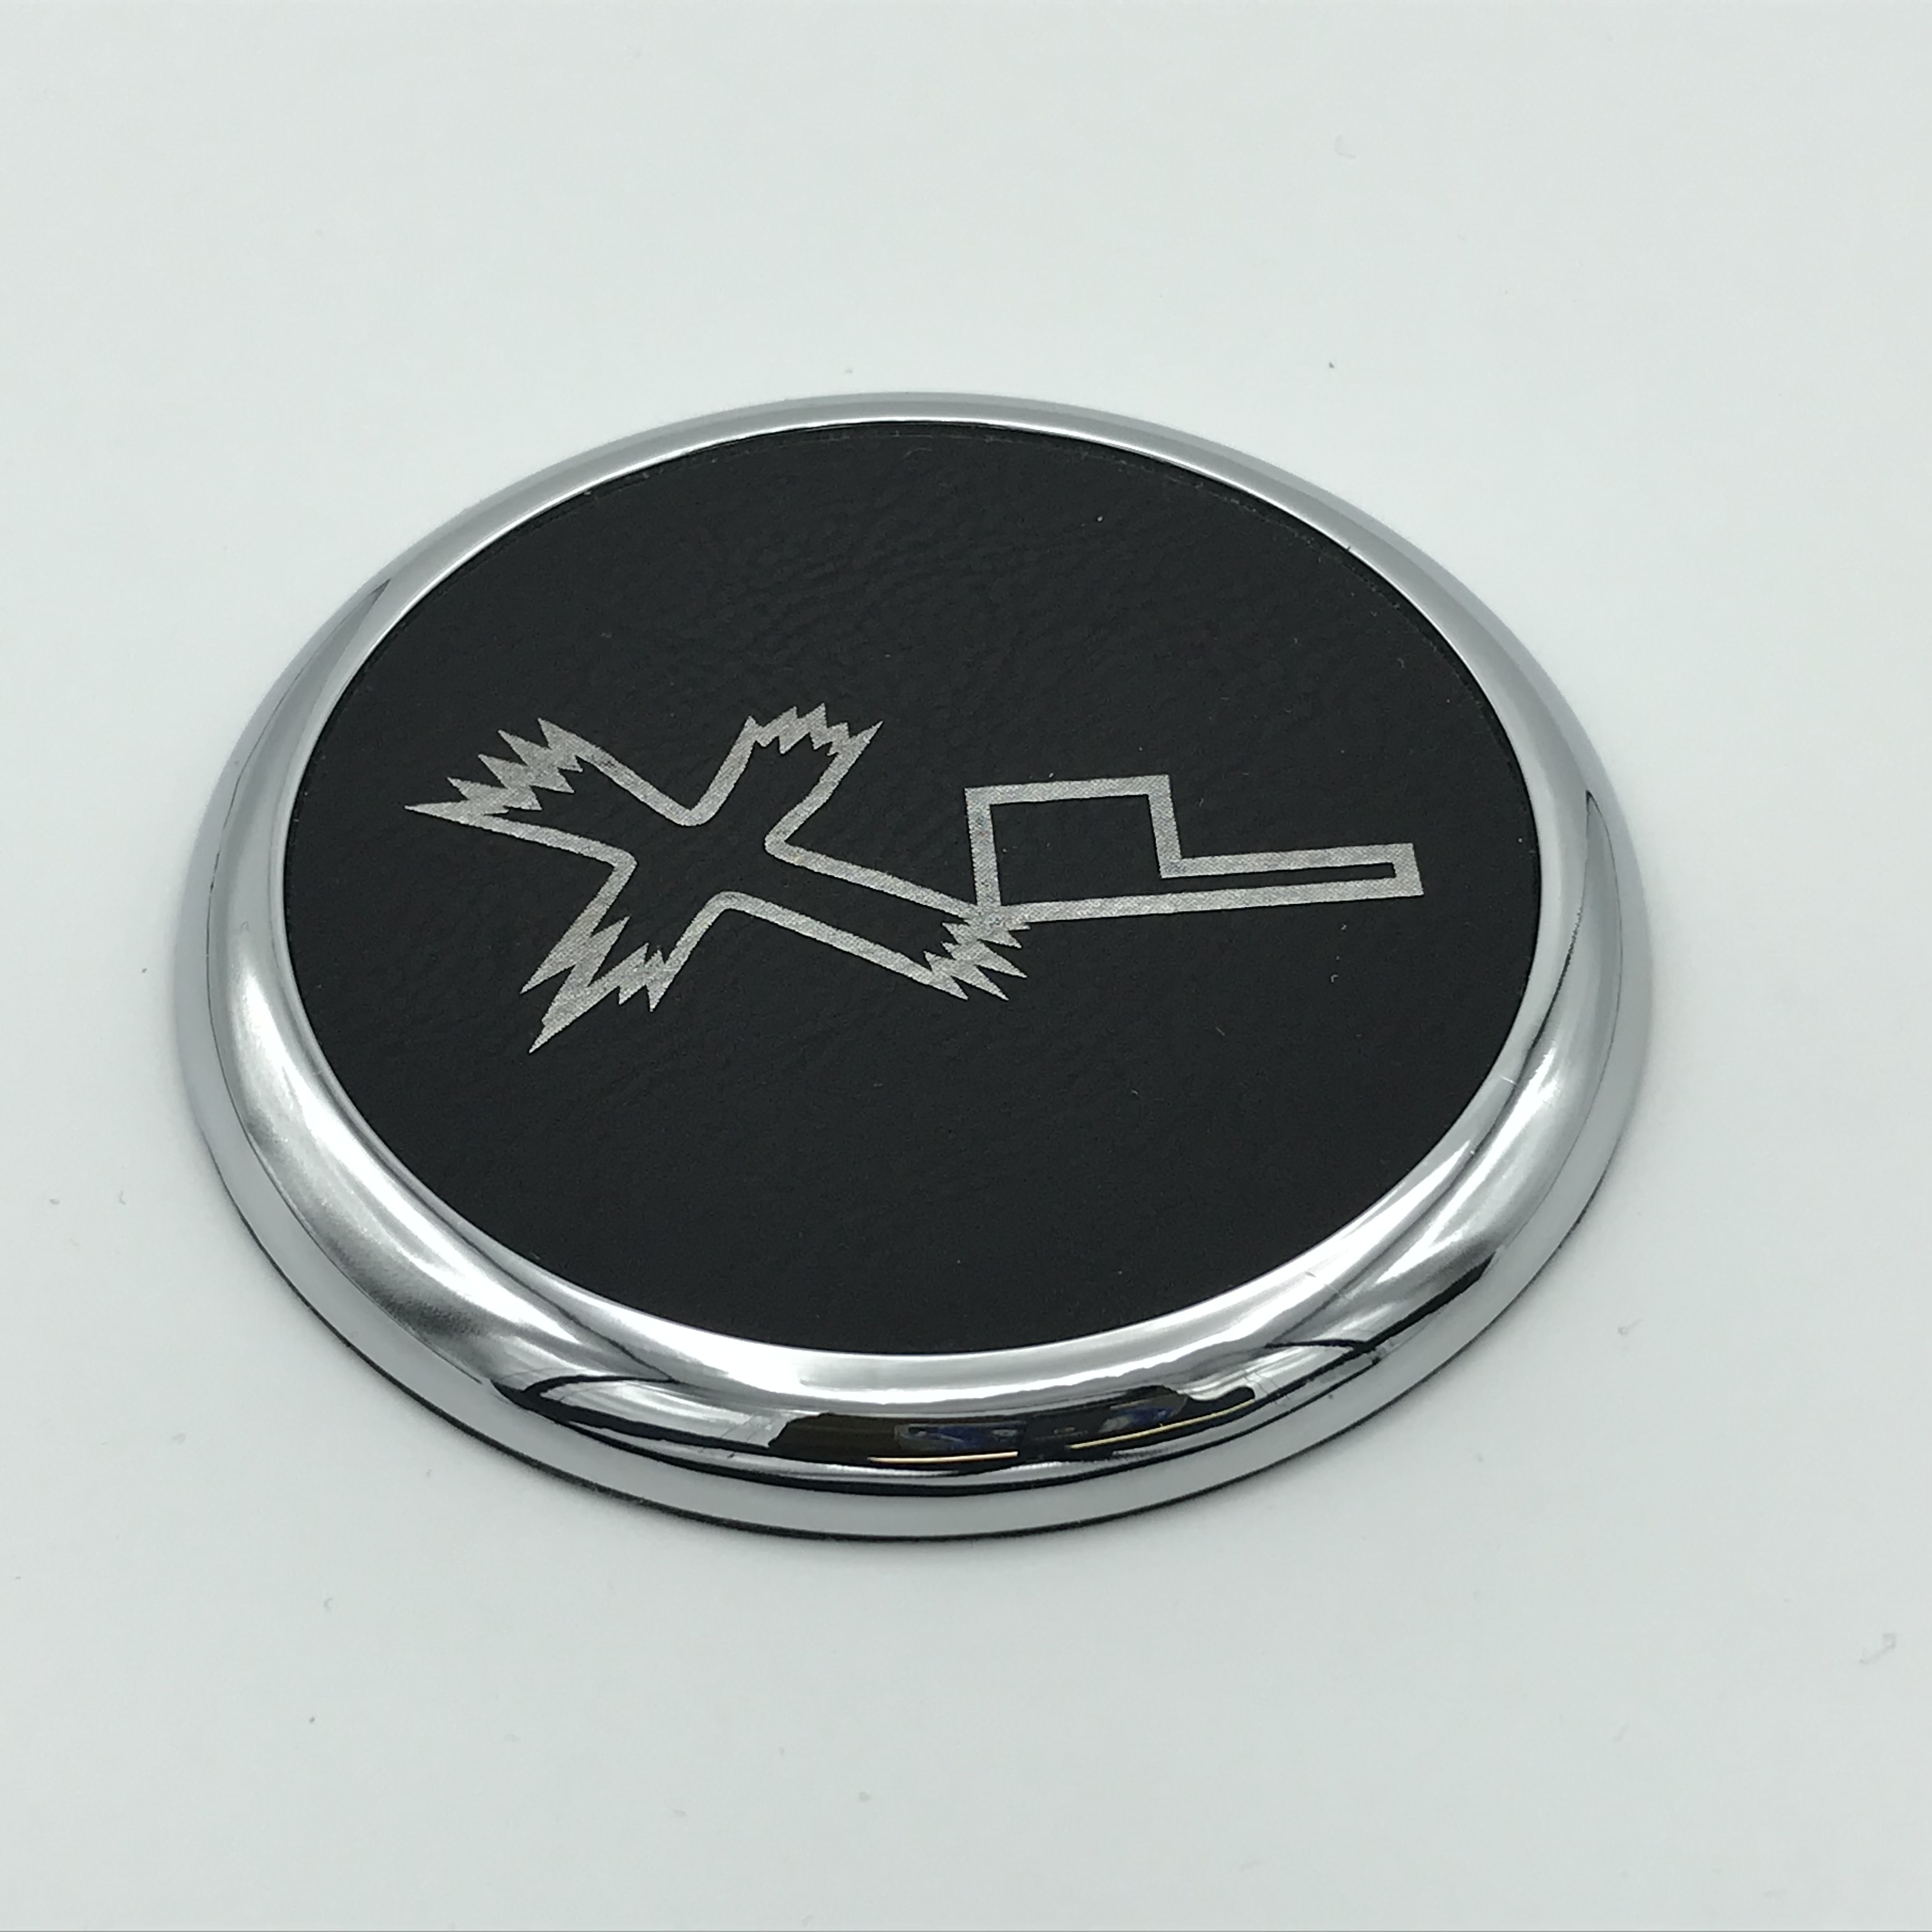 XL - Engraved Leatherette Round Coaster w/ Silver Edge